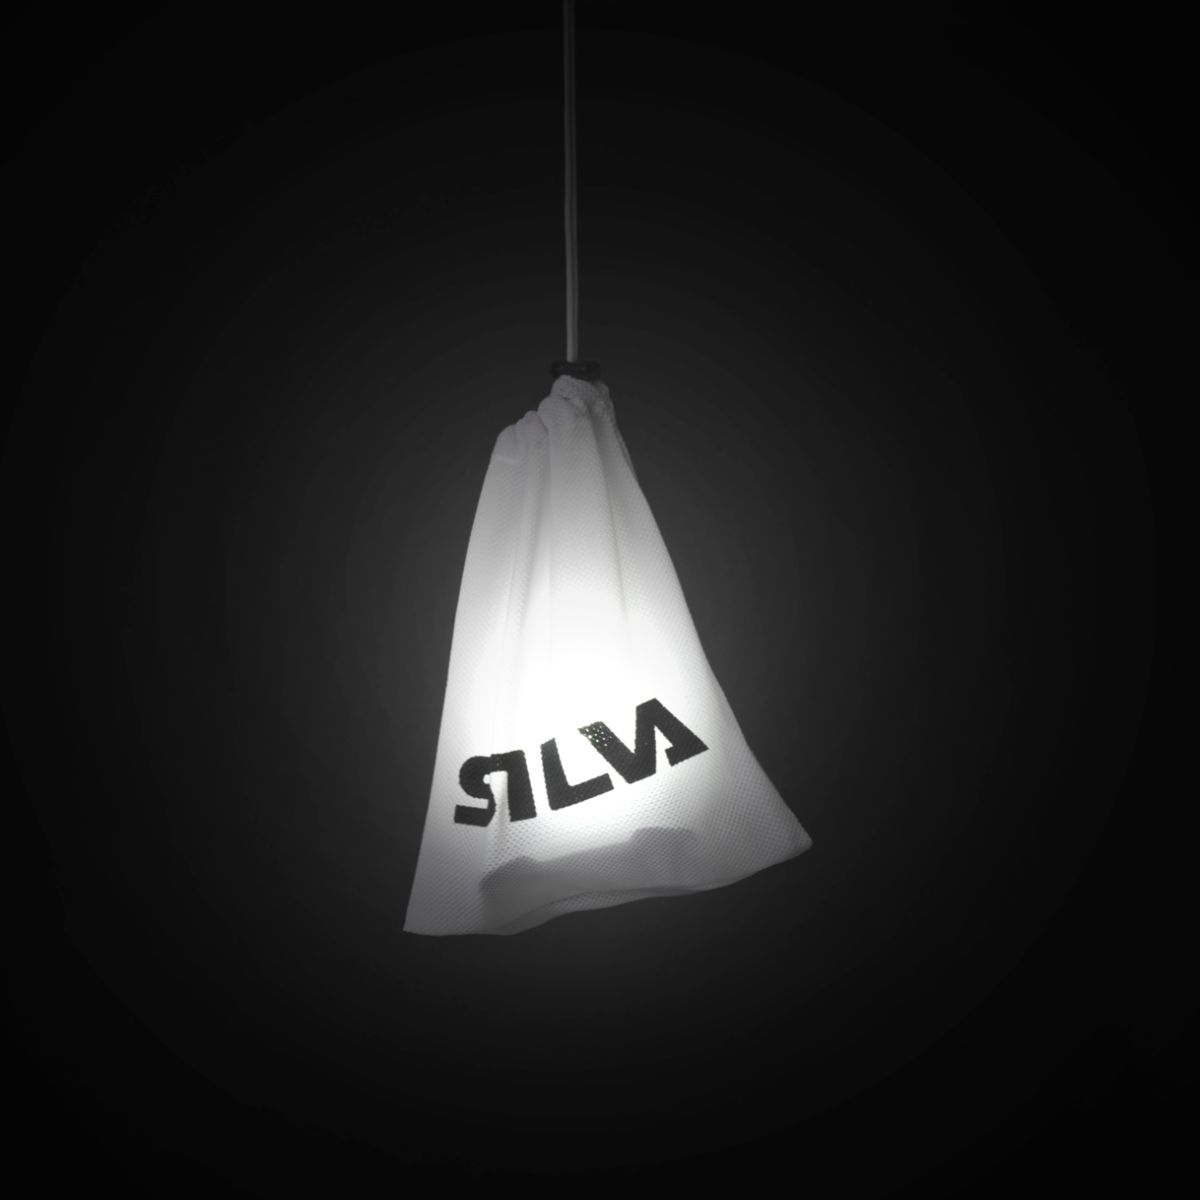 Silva Explore 4RC Headtorch bag light inside